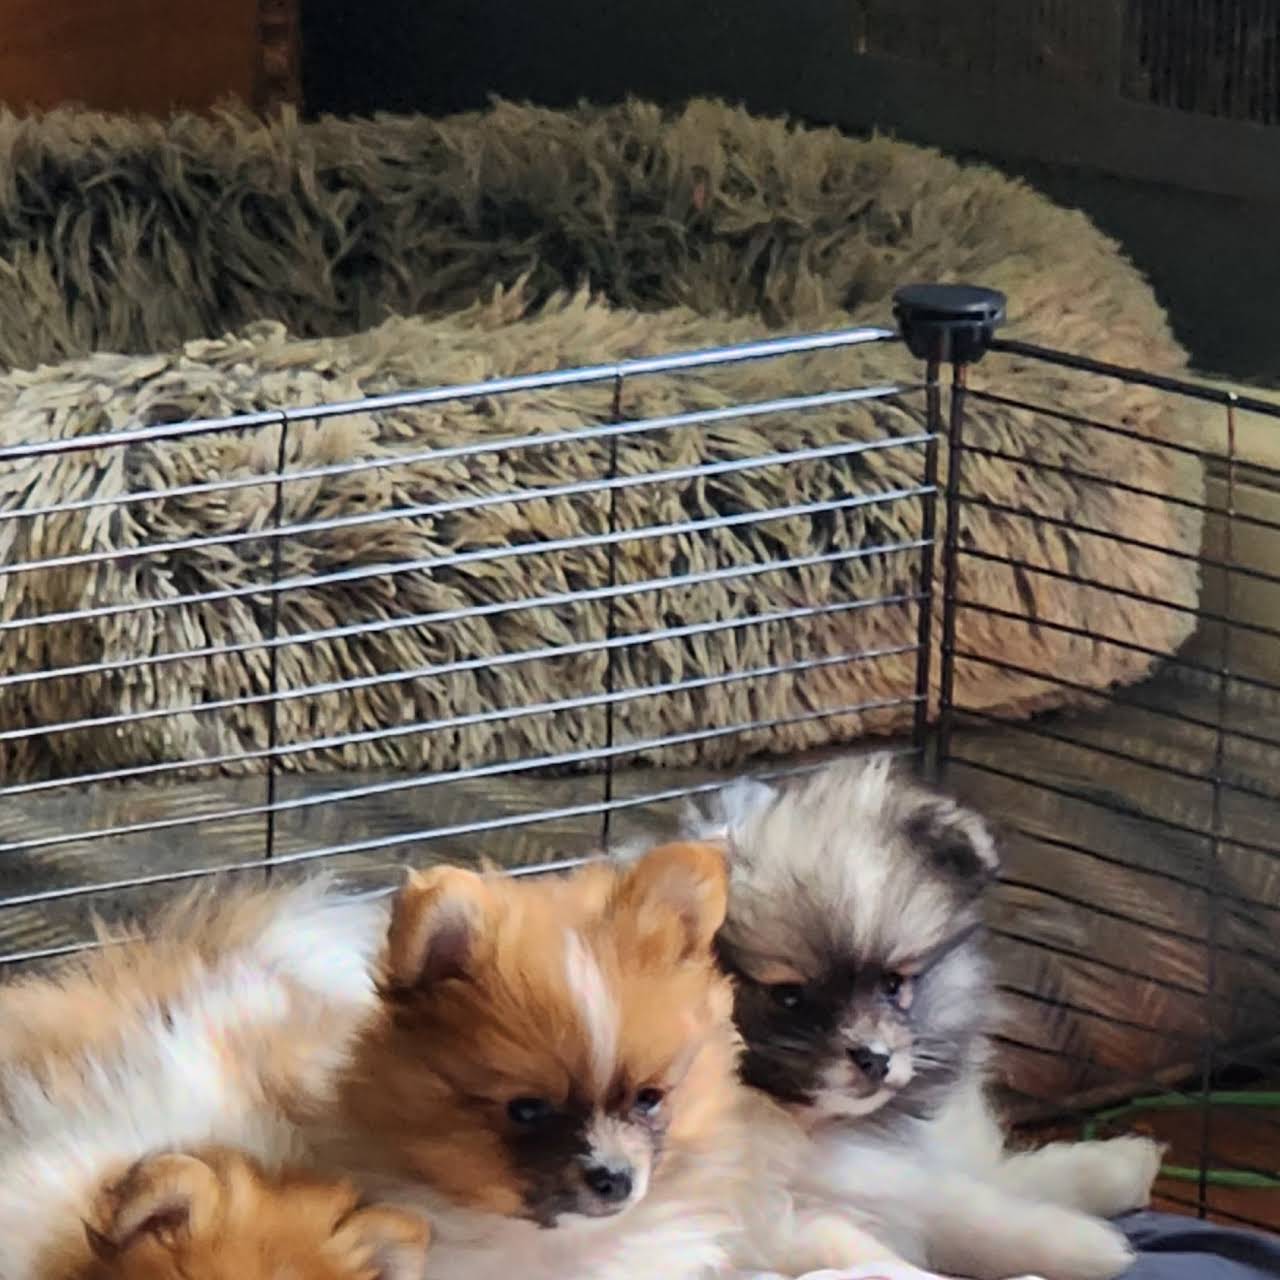 gray pomeranian puppies